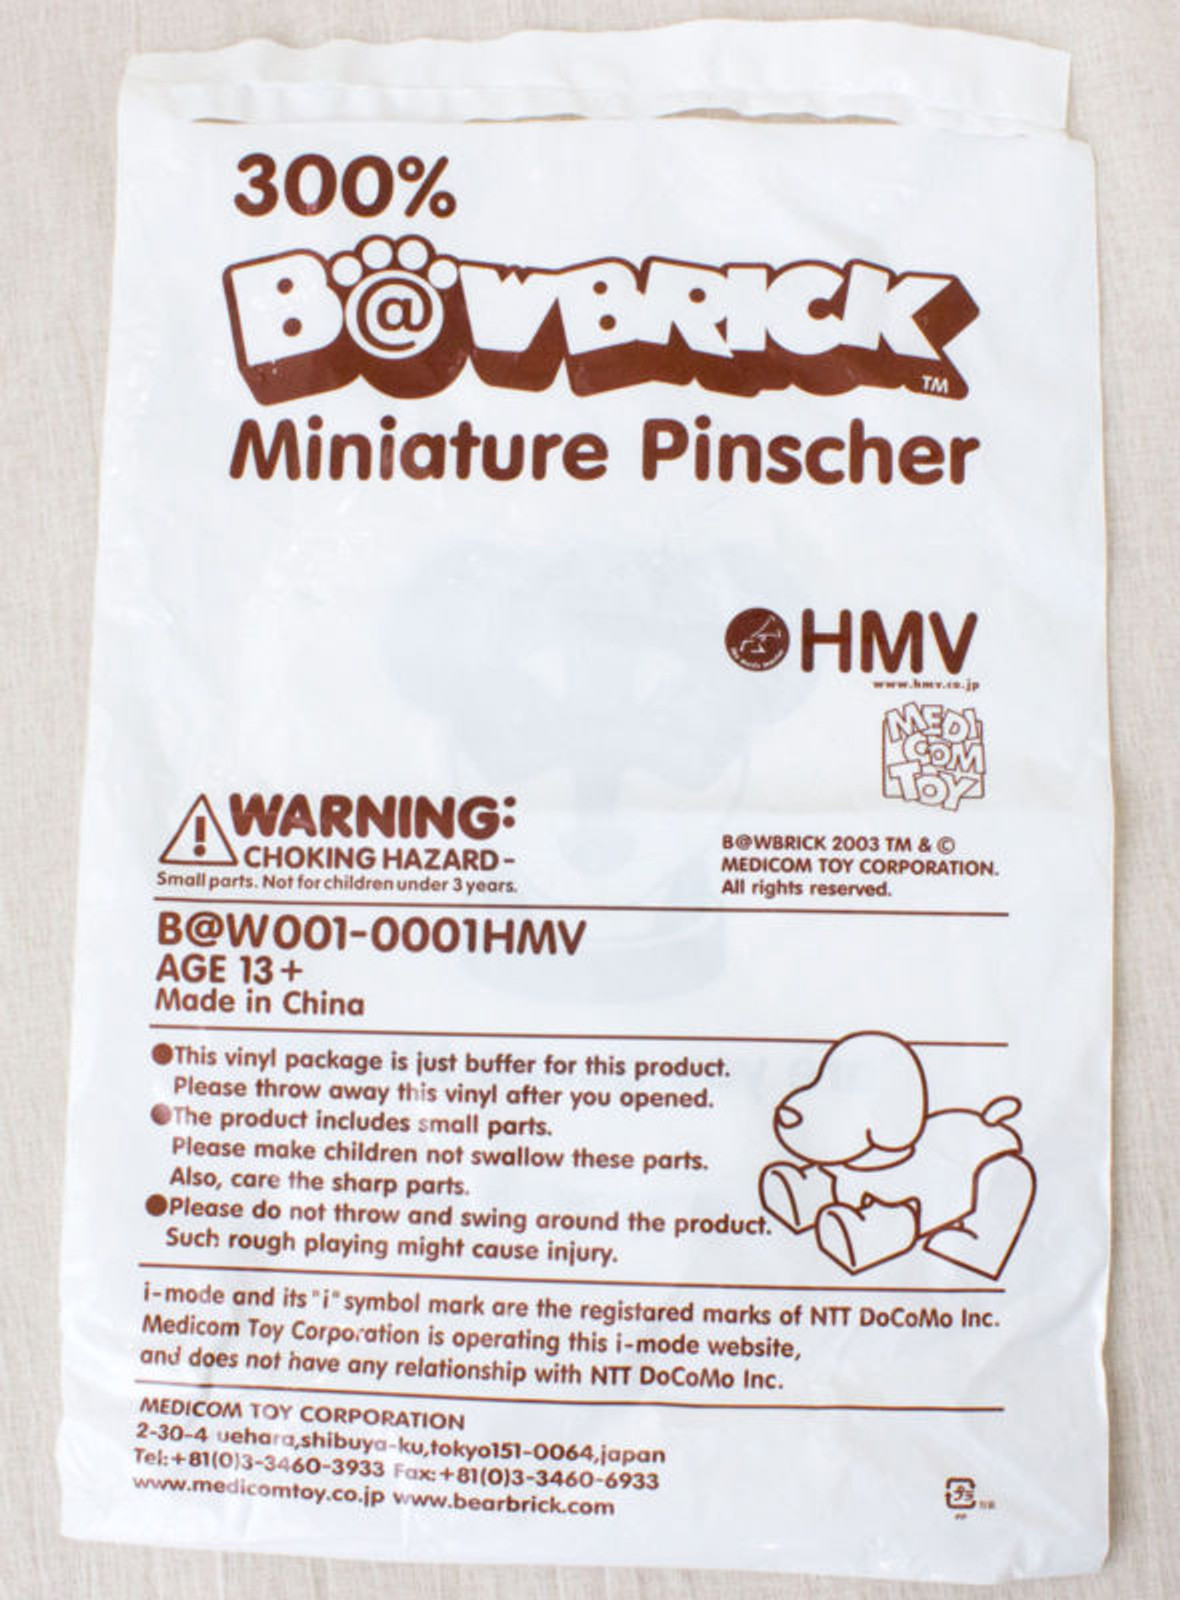 B Wbrick Bowbrick Miniature Pinscher 300 Hmv Limited Medicom Toy Japan